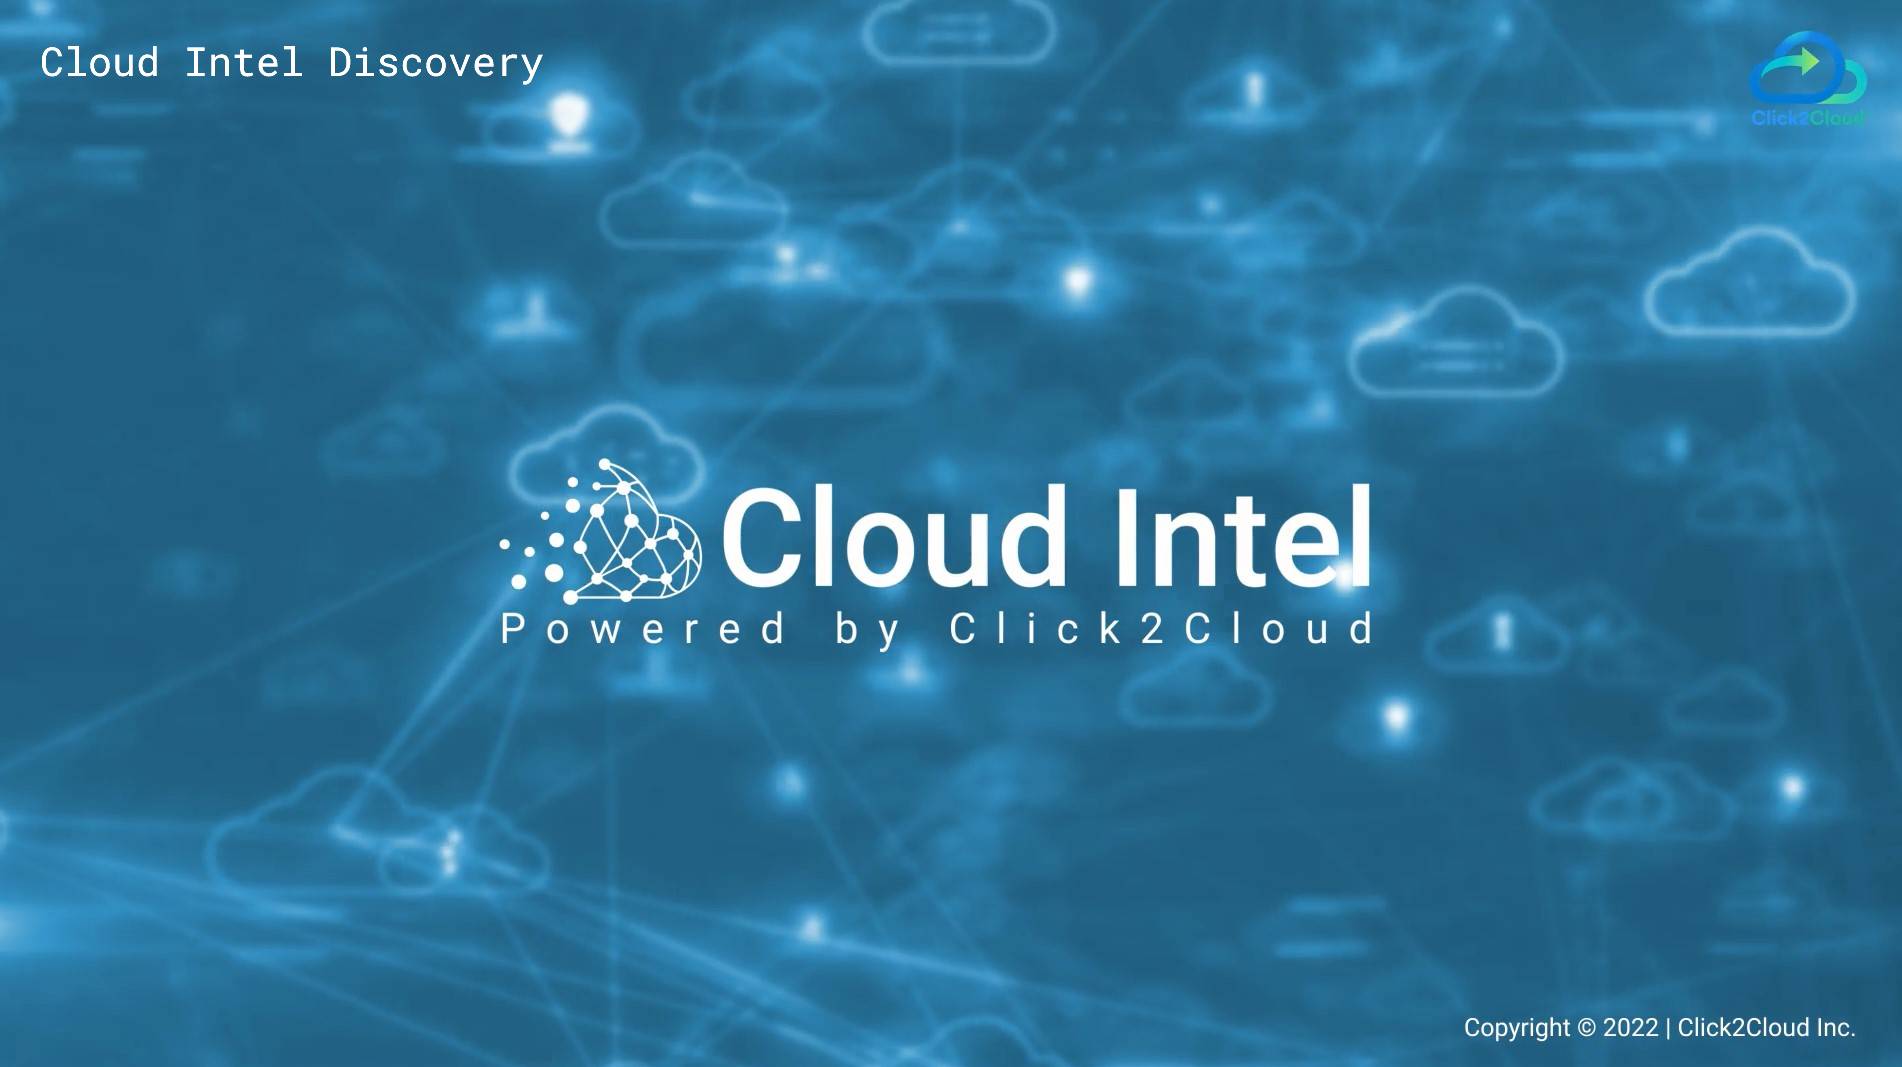 Cloud Discovery through Cloud Intel-Click2Cloud